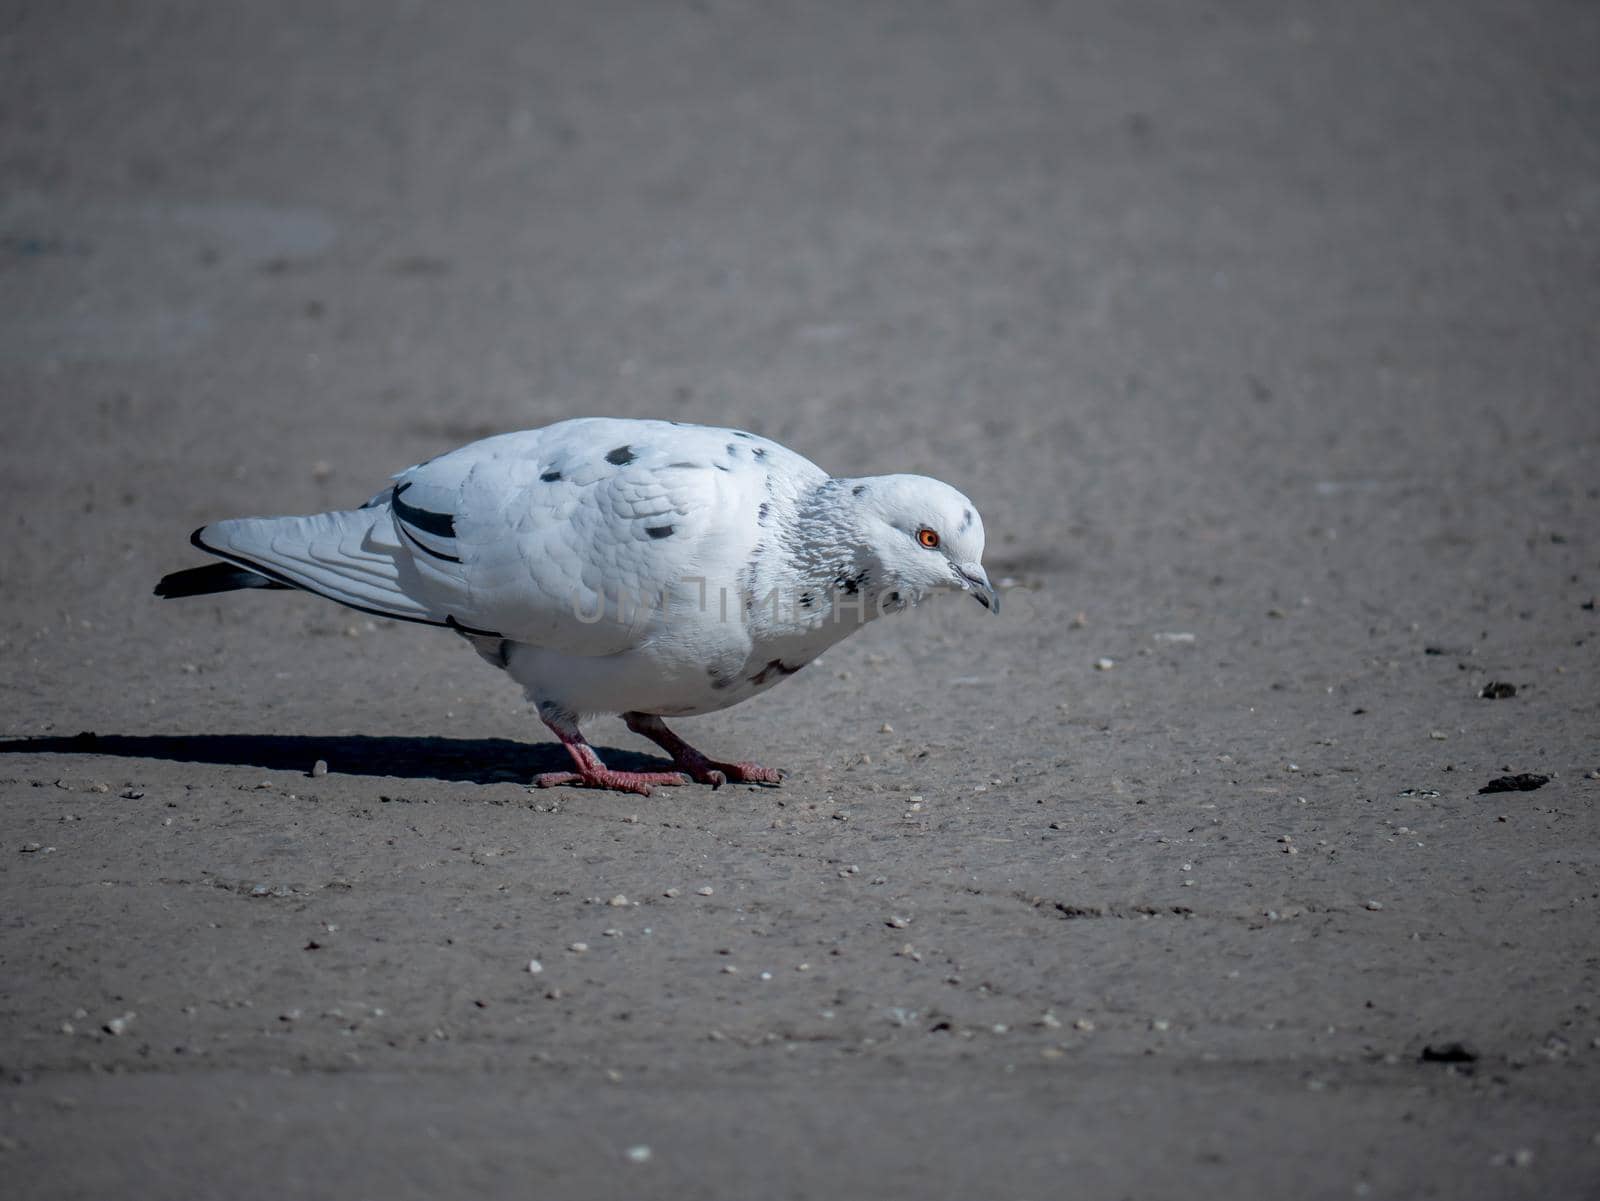 beautiful white pigeon on asphalt. color